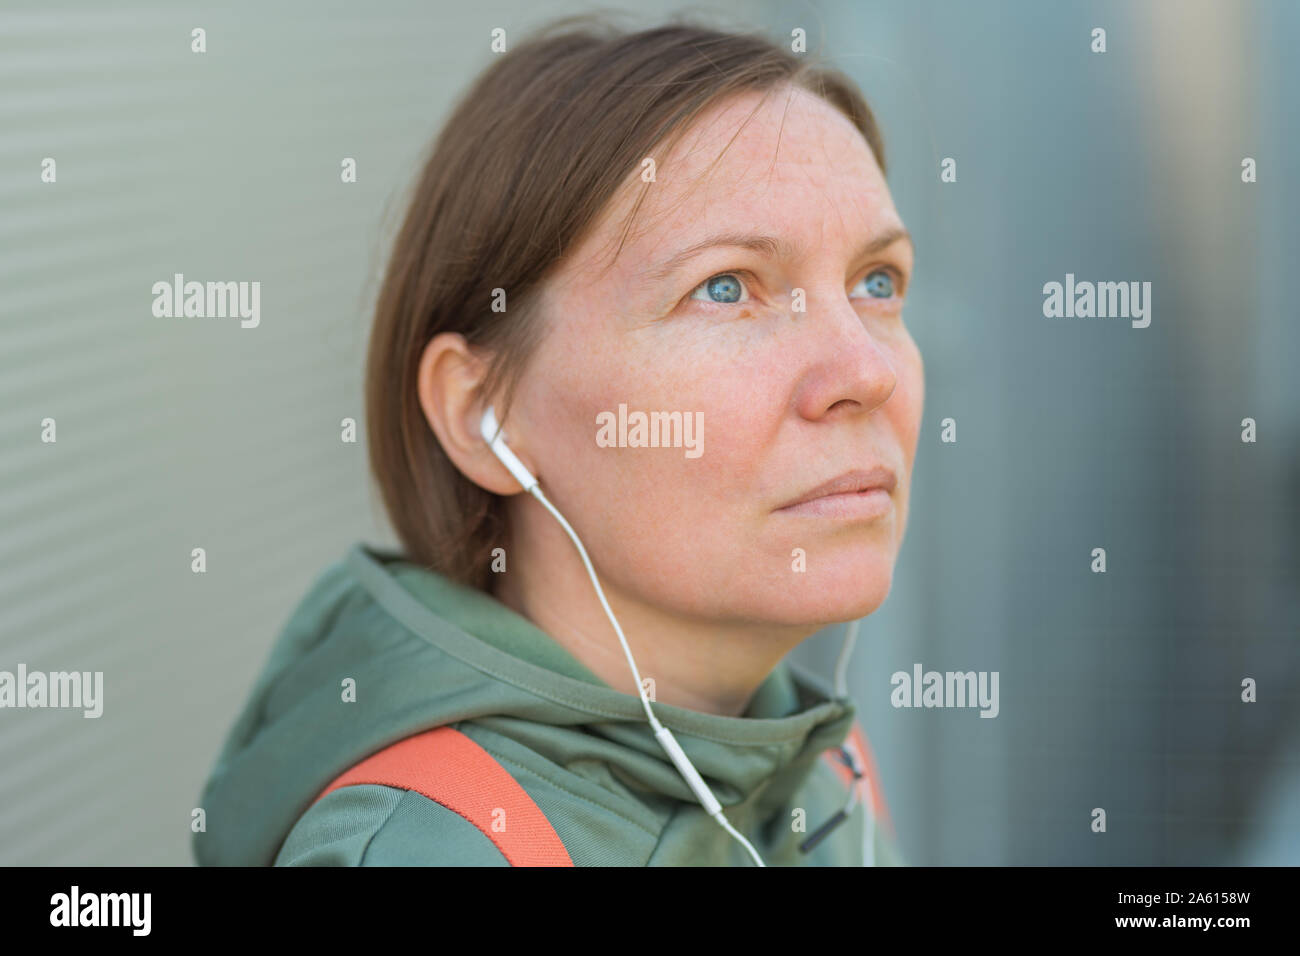 Brisk walker female listening music on earphones, portrait of woman in sports clothing in urban surrounding Stock Photo